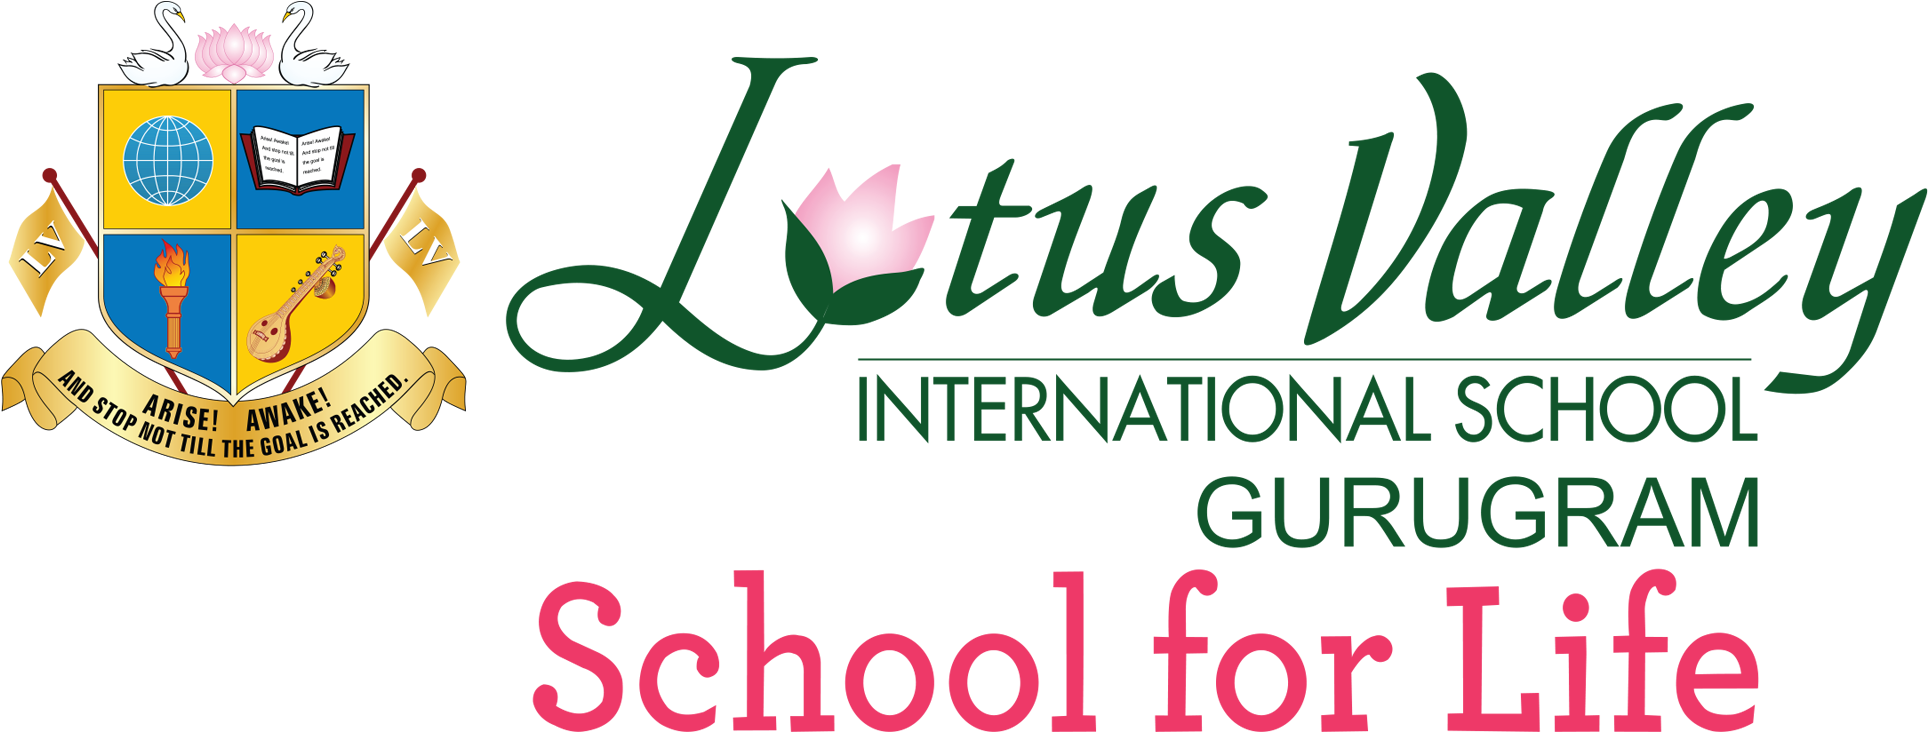 Lotus Valley International School (2171x834), Png Download